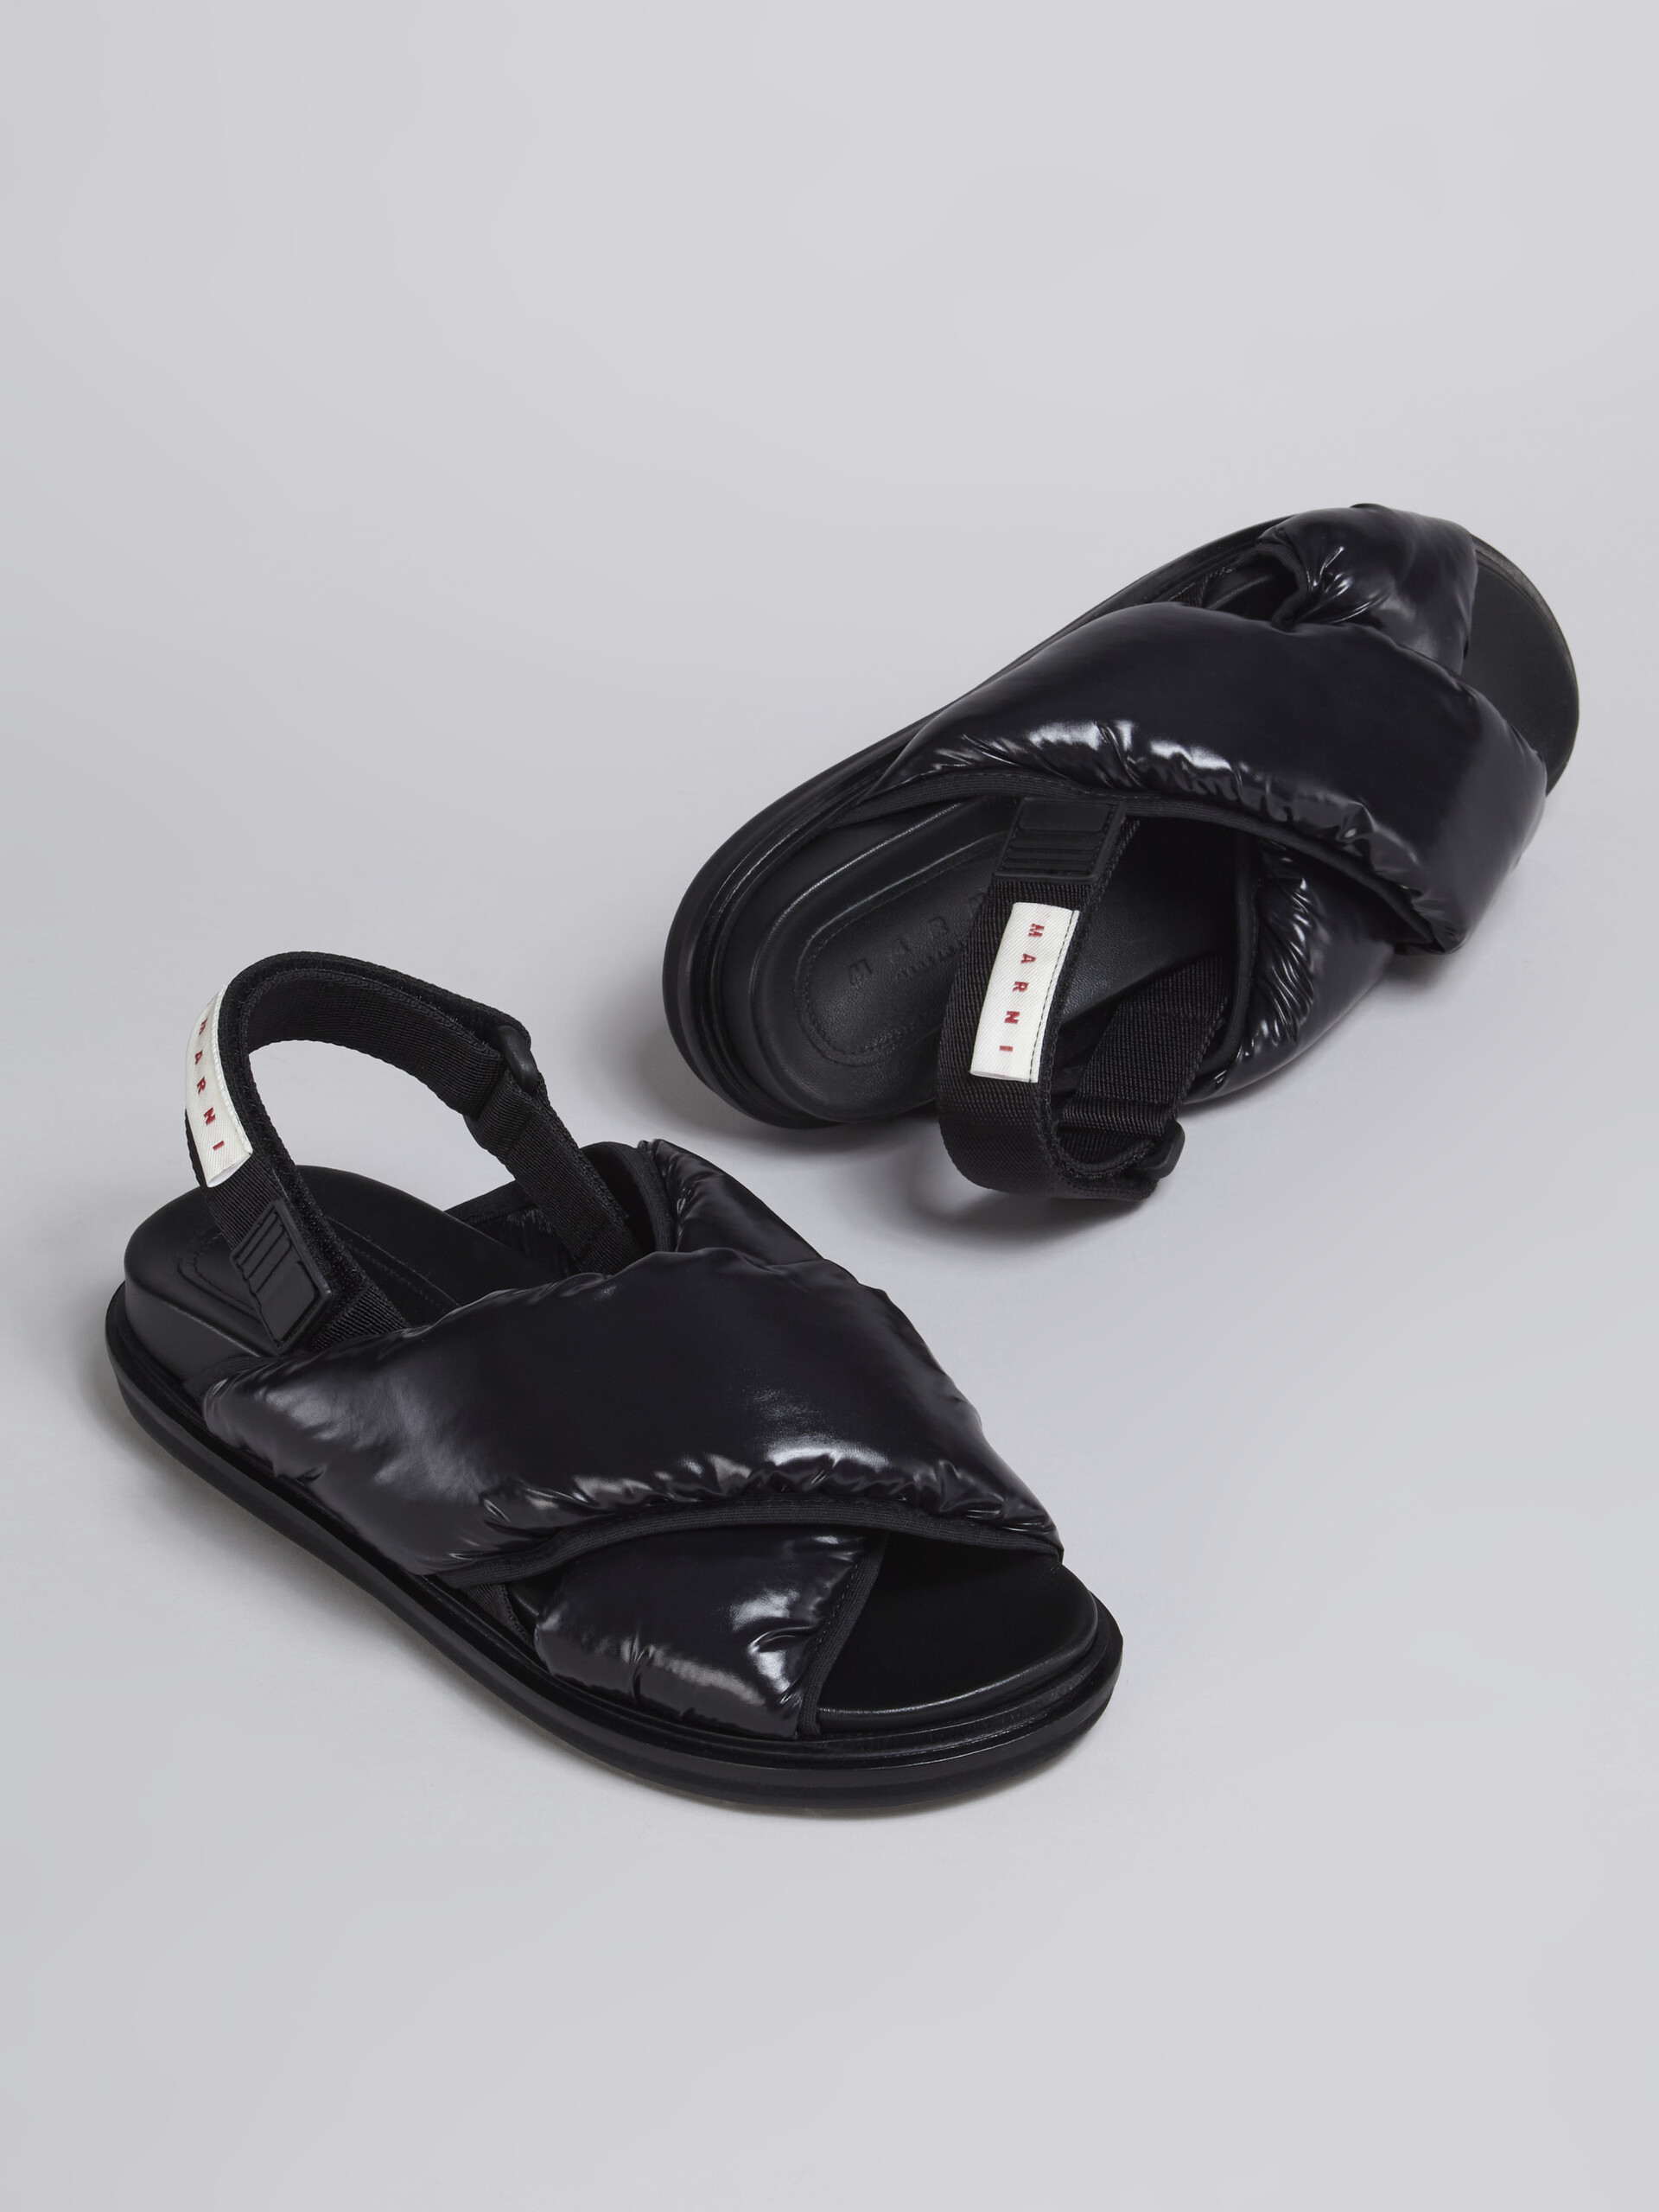 Black nylon criss-cross fussbett - Sandals - Image 5